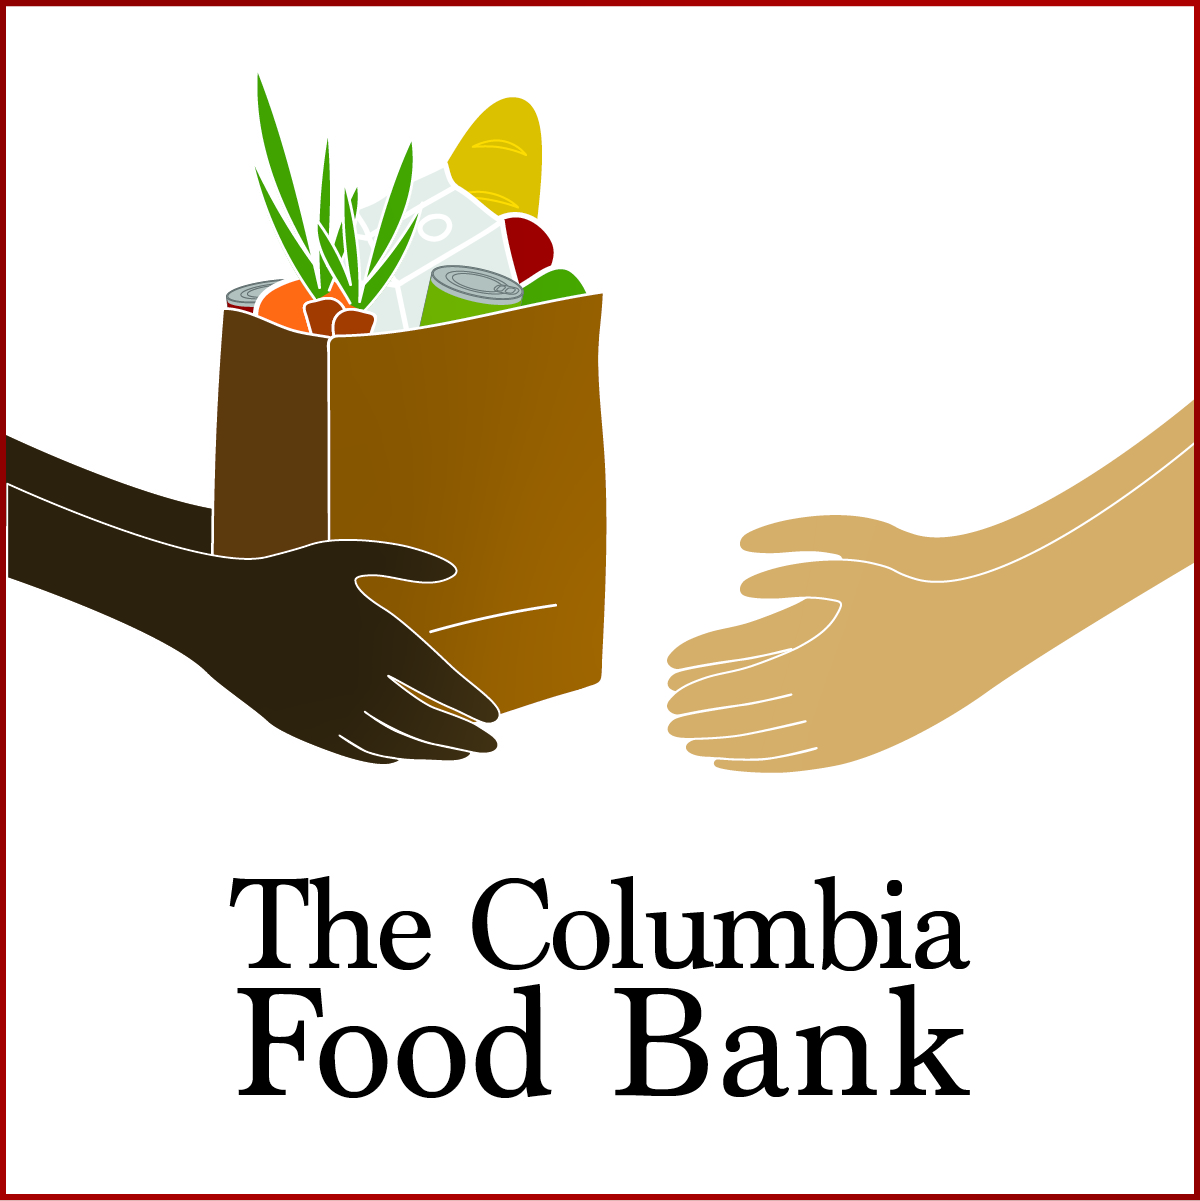 The Columbia Food Bank